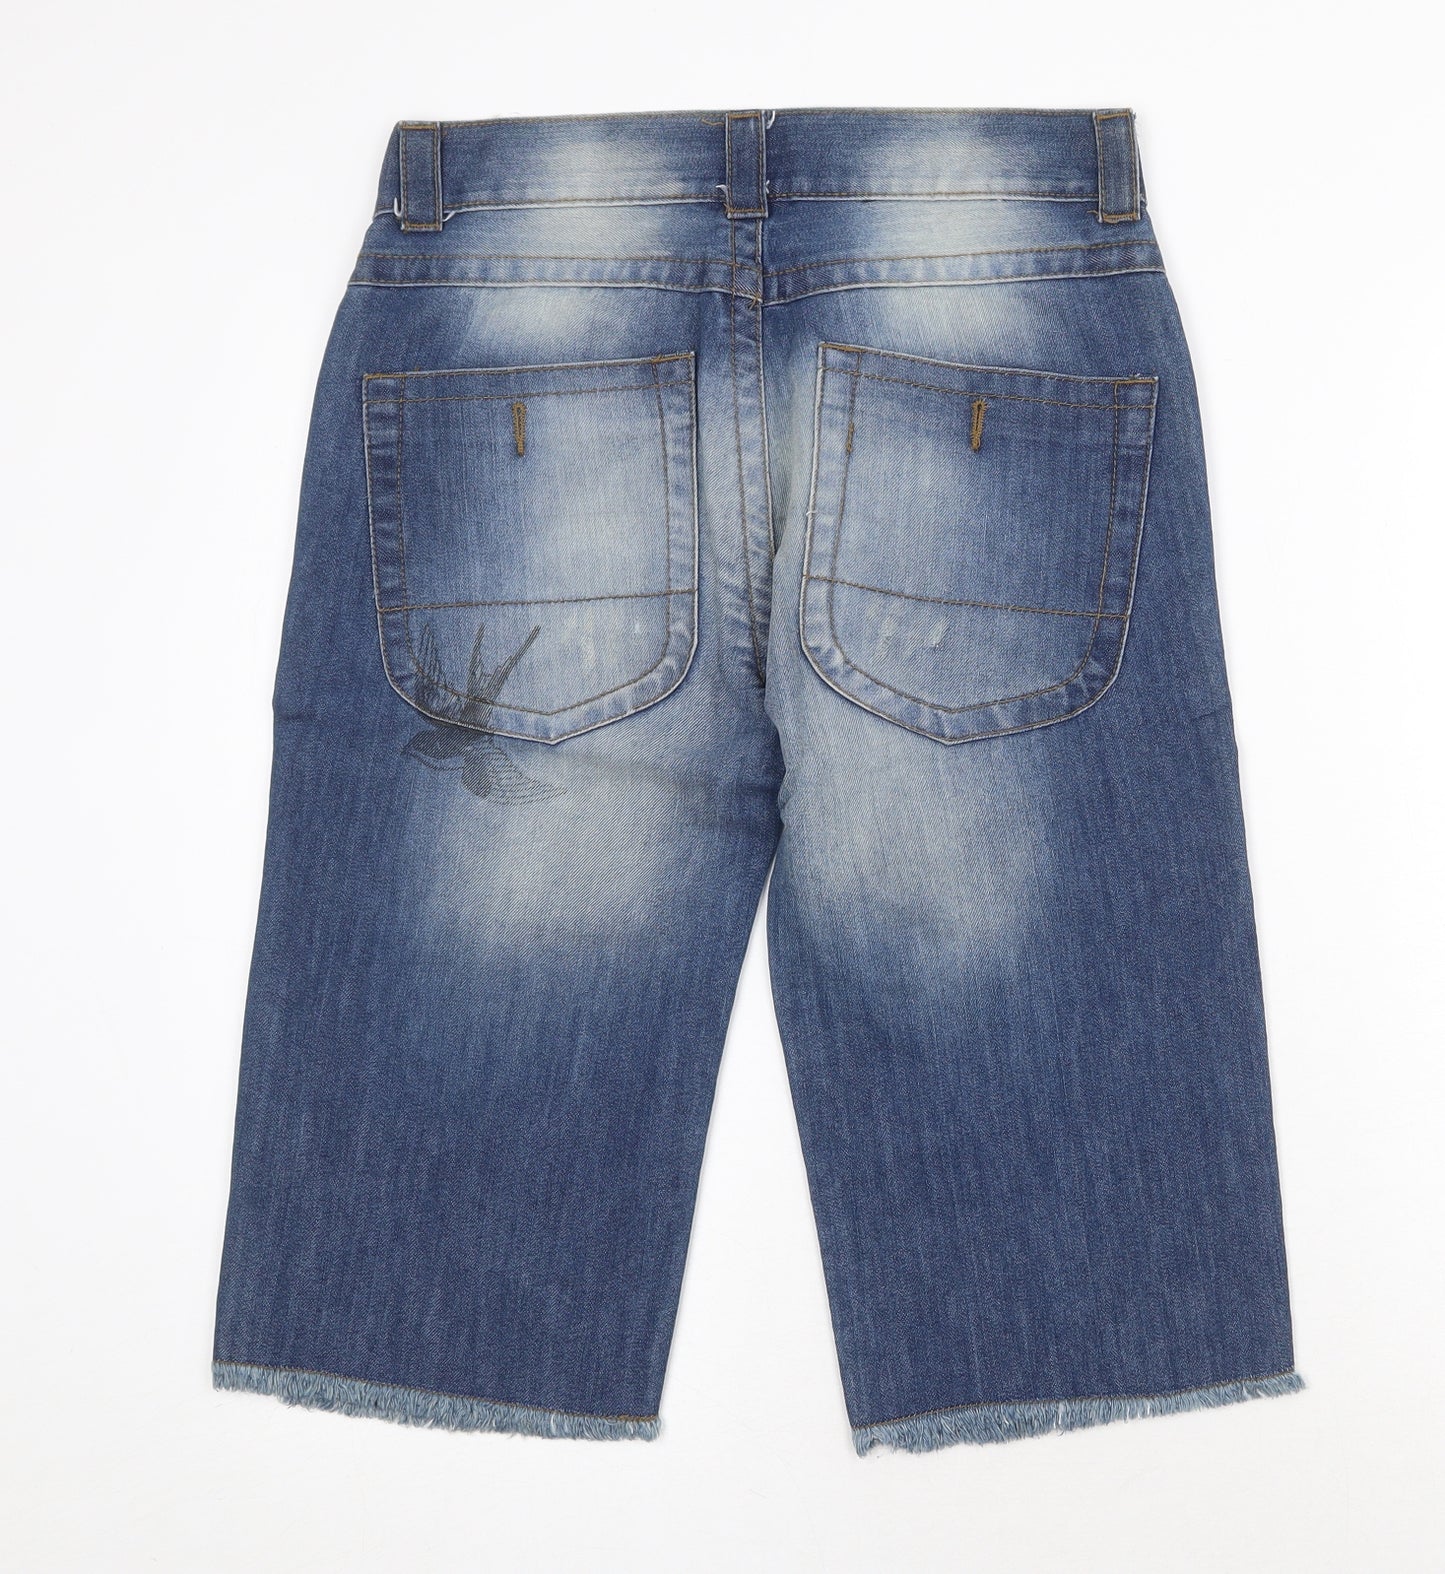 Denim & Co. Womens Blue Cotton Bermuda Shorts Size 8 Regular Zip - Raw Hems Patches Graphic Prints